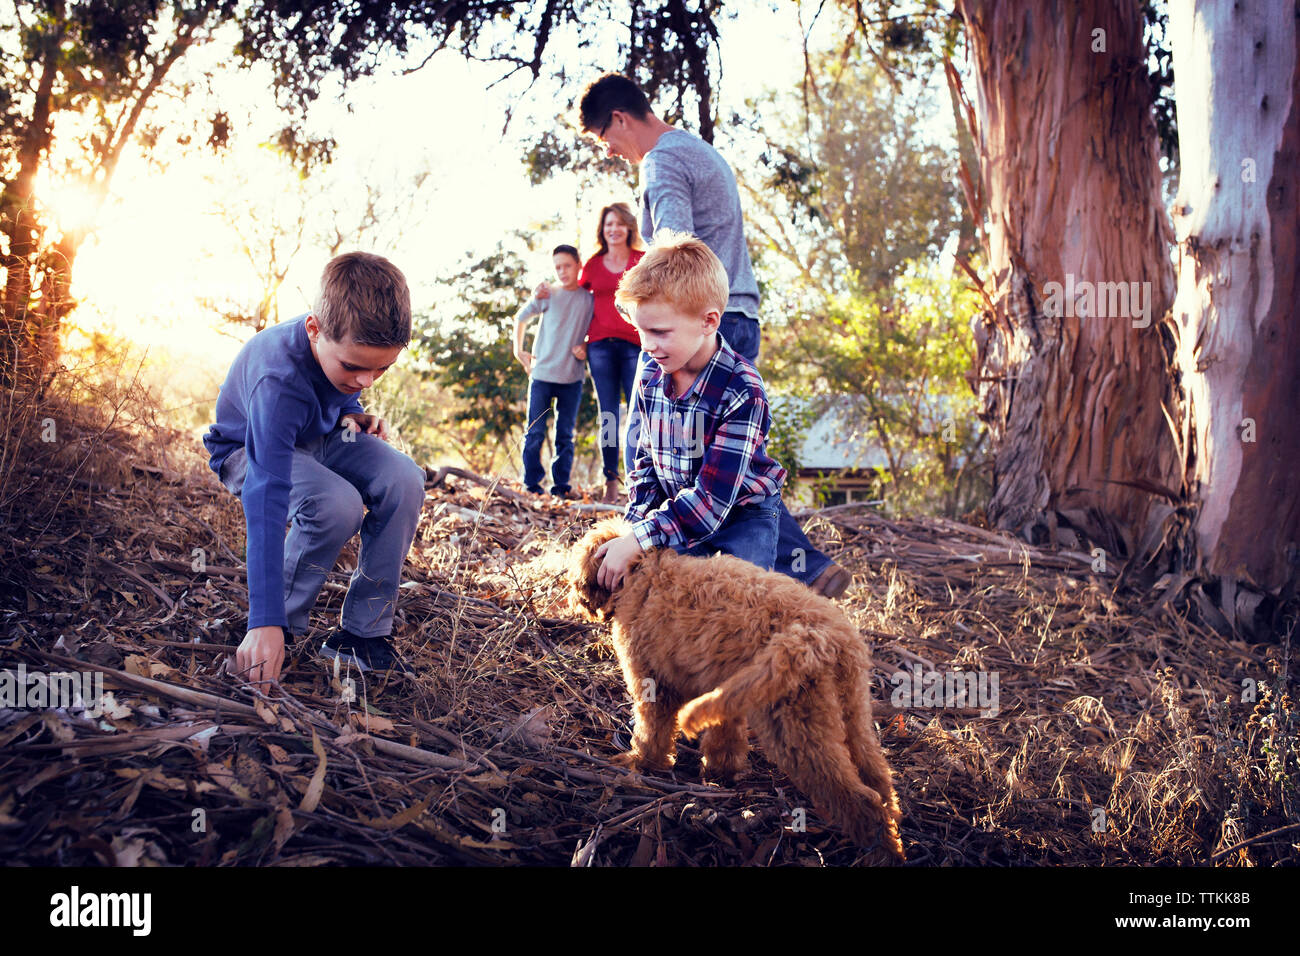 Family enjoying with dog on field amidst trees Stock Photo